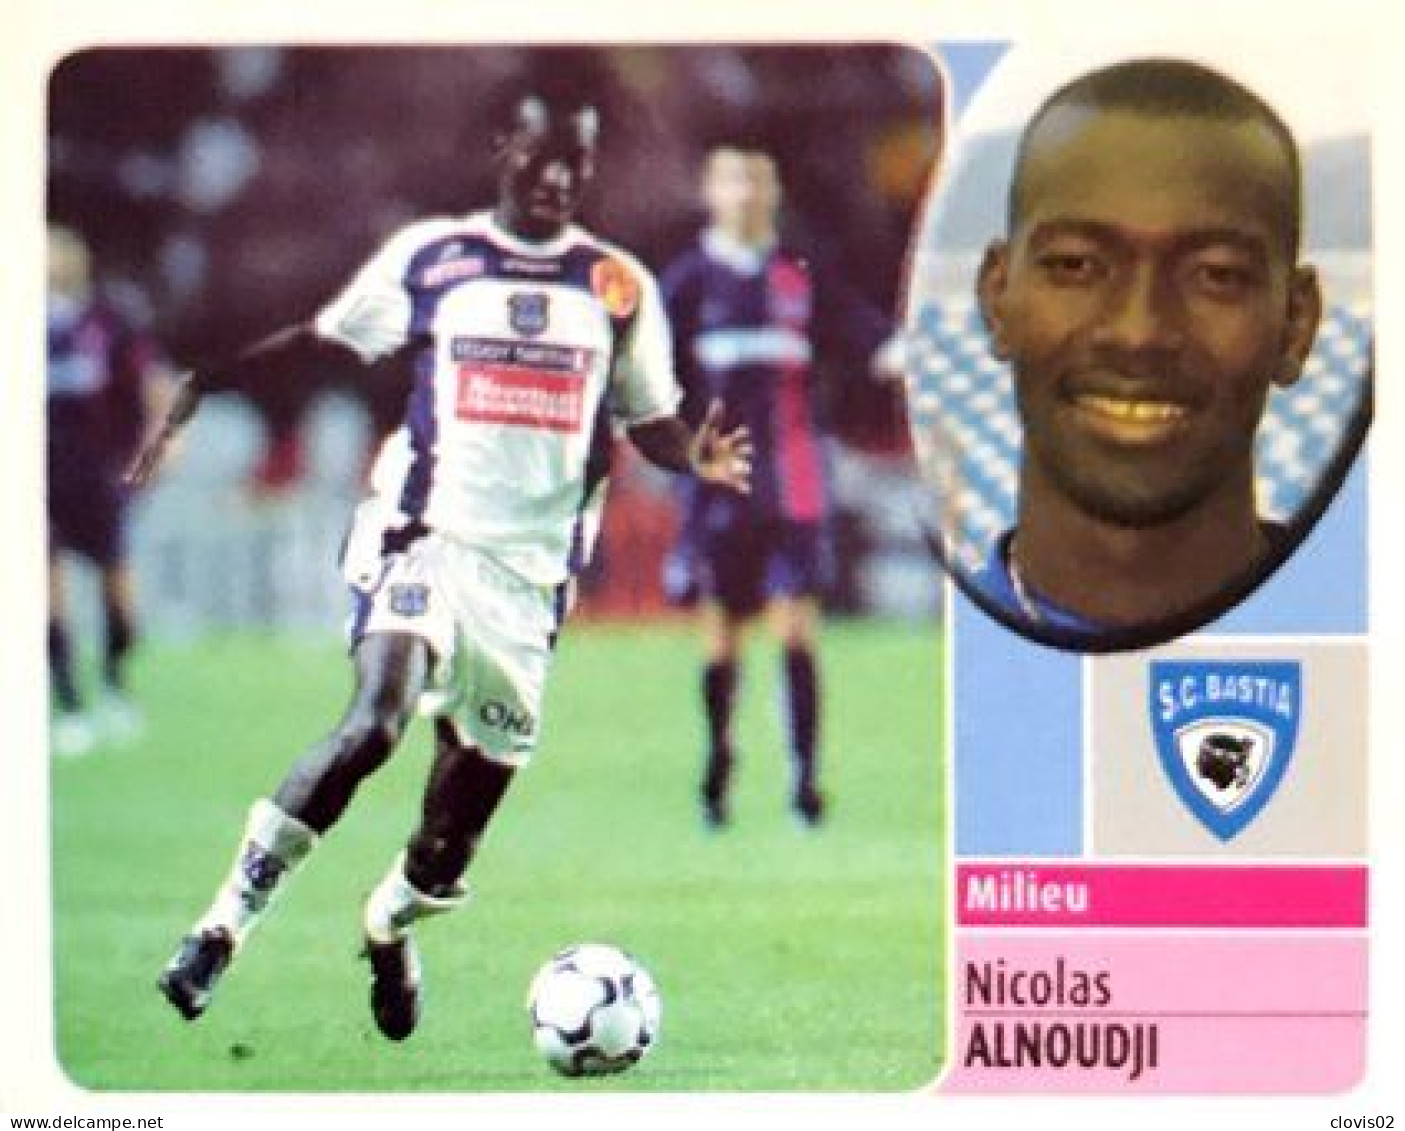 36 Nicolas Alnoudji - SC Bastia - Panini France Foot 2003 Sticker Vignette - French Edition